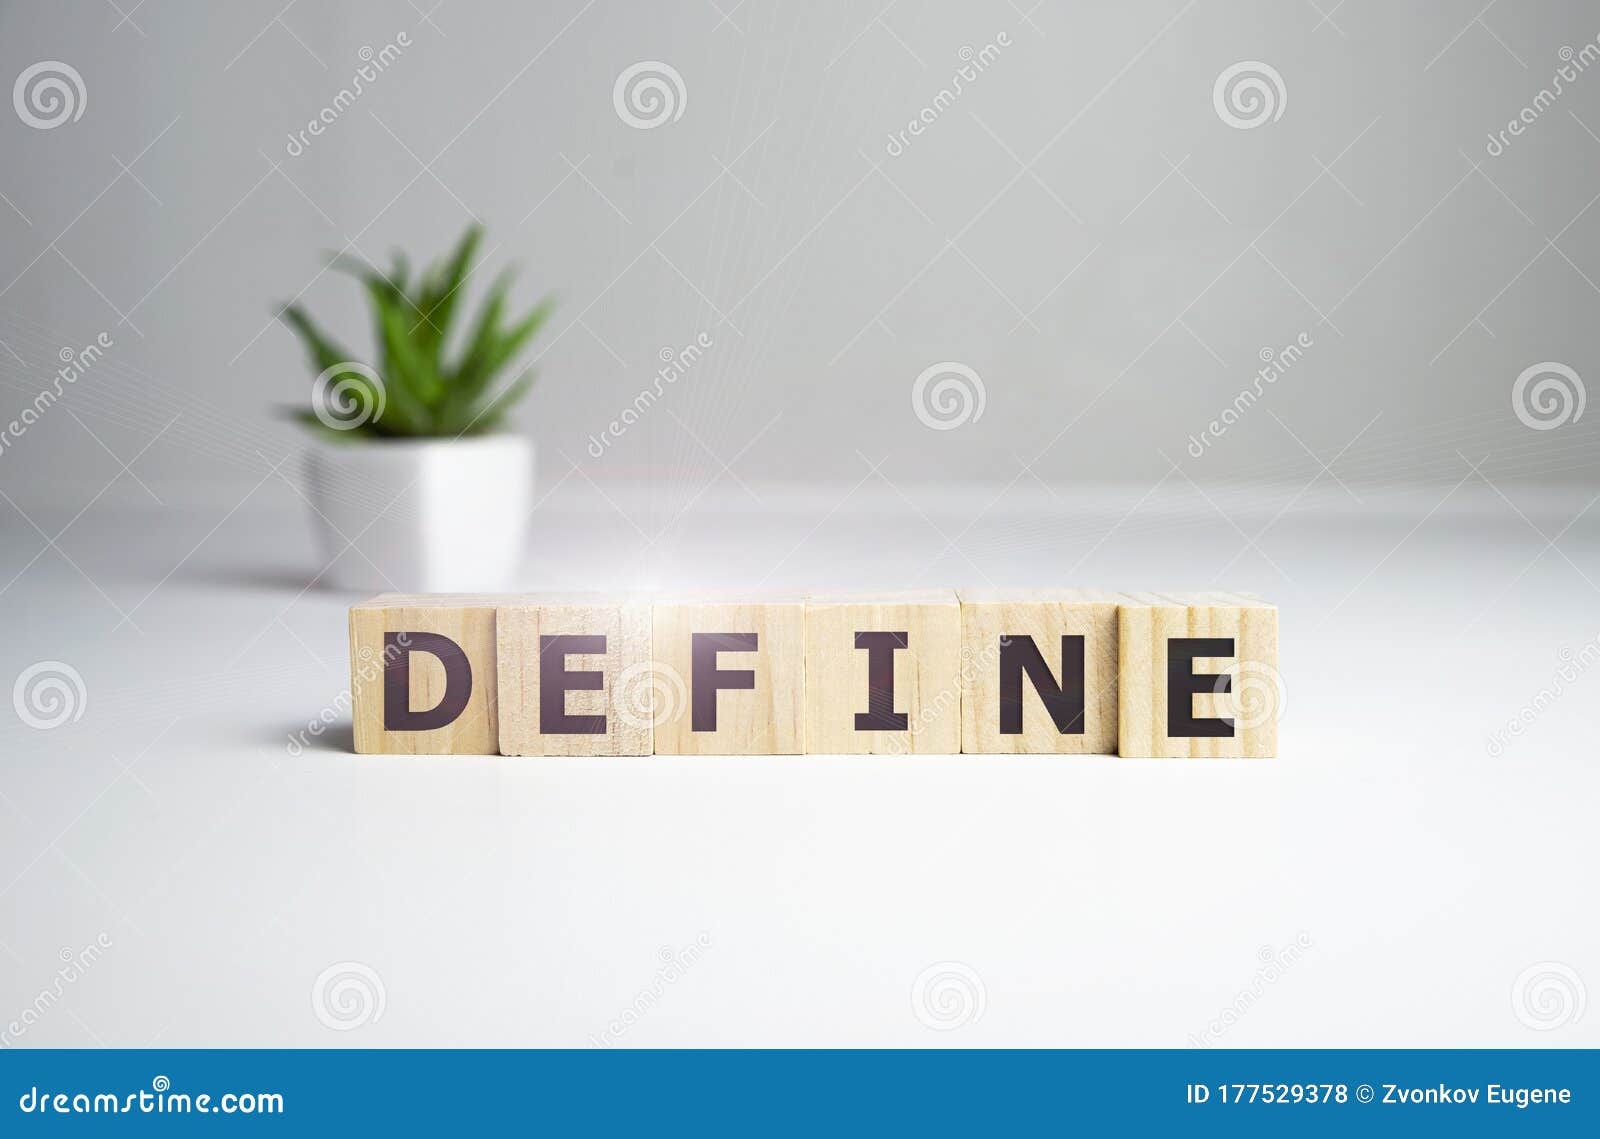 define word made with building blocks, define concept